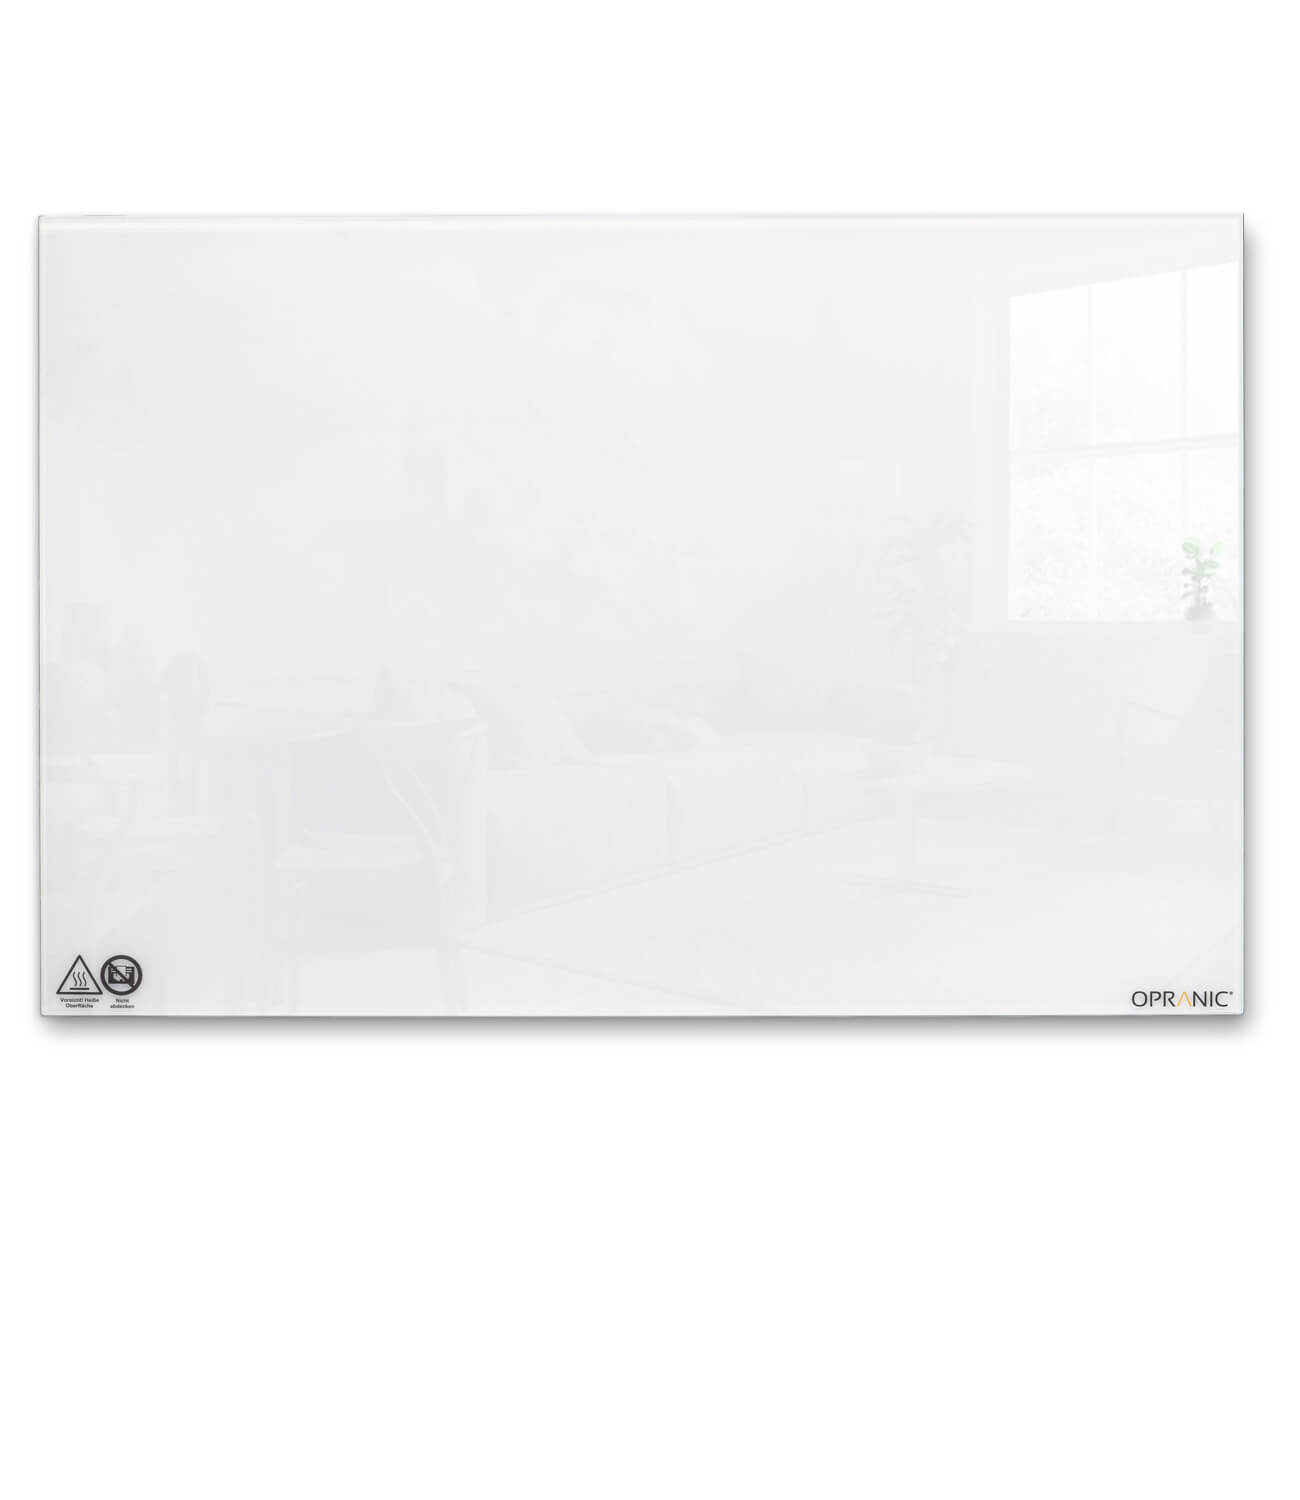 OPRANIC P7, Glass 450W, Infrared Panel Heater, White